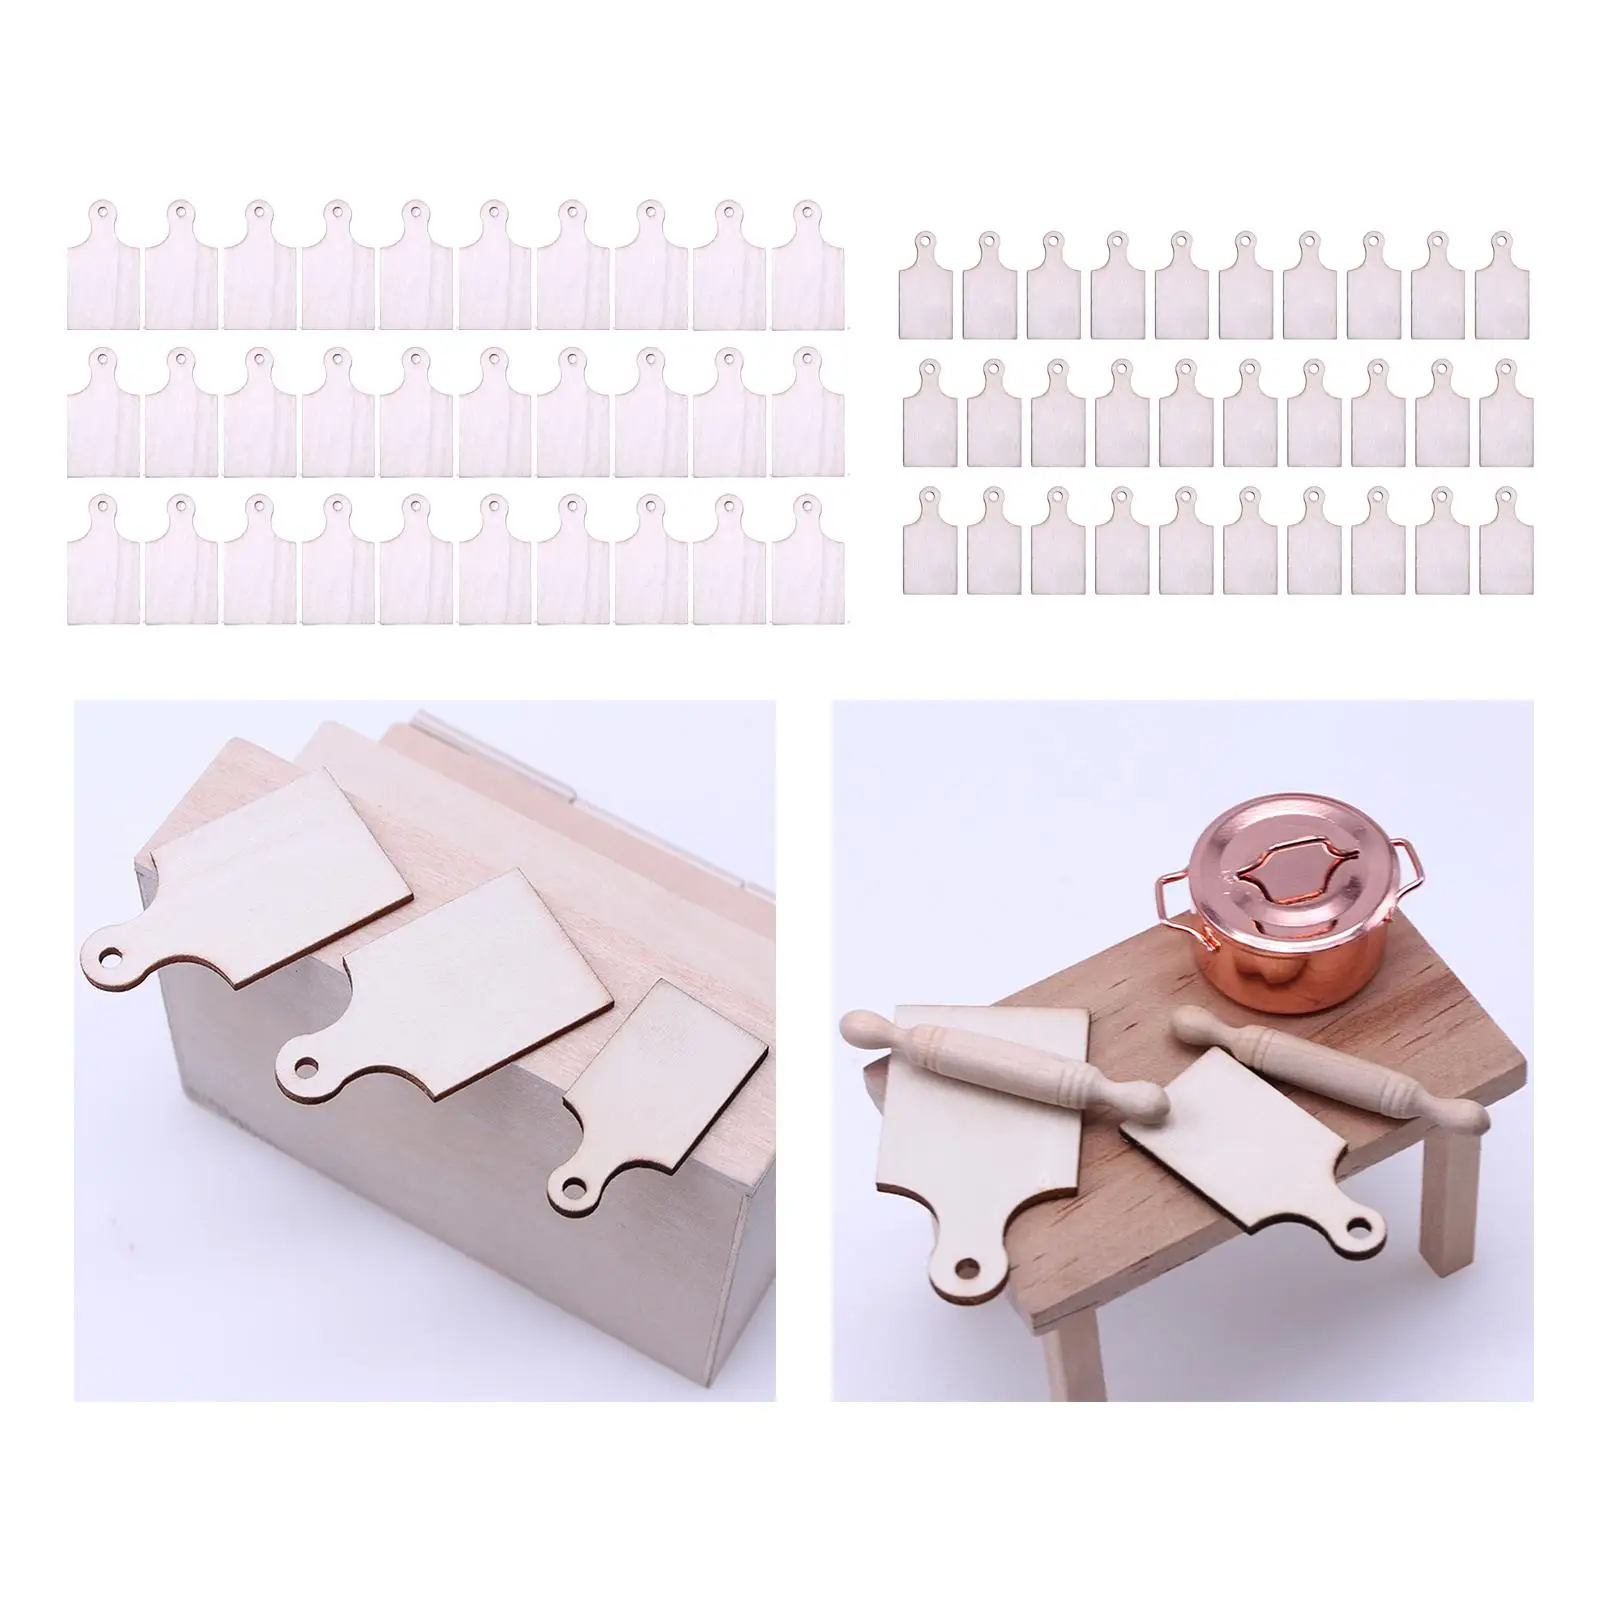 Handmade Miniaturechen Furniture Durable Miniature Food Plate For Kids Toy